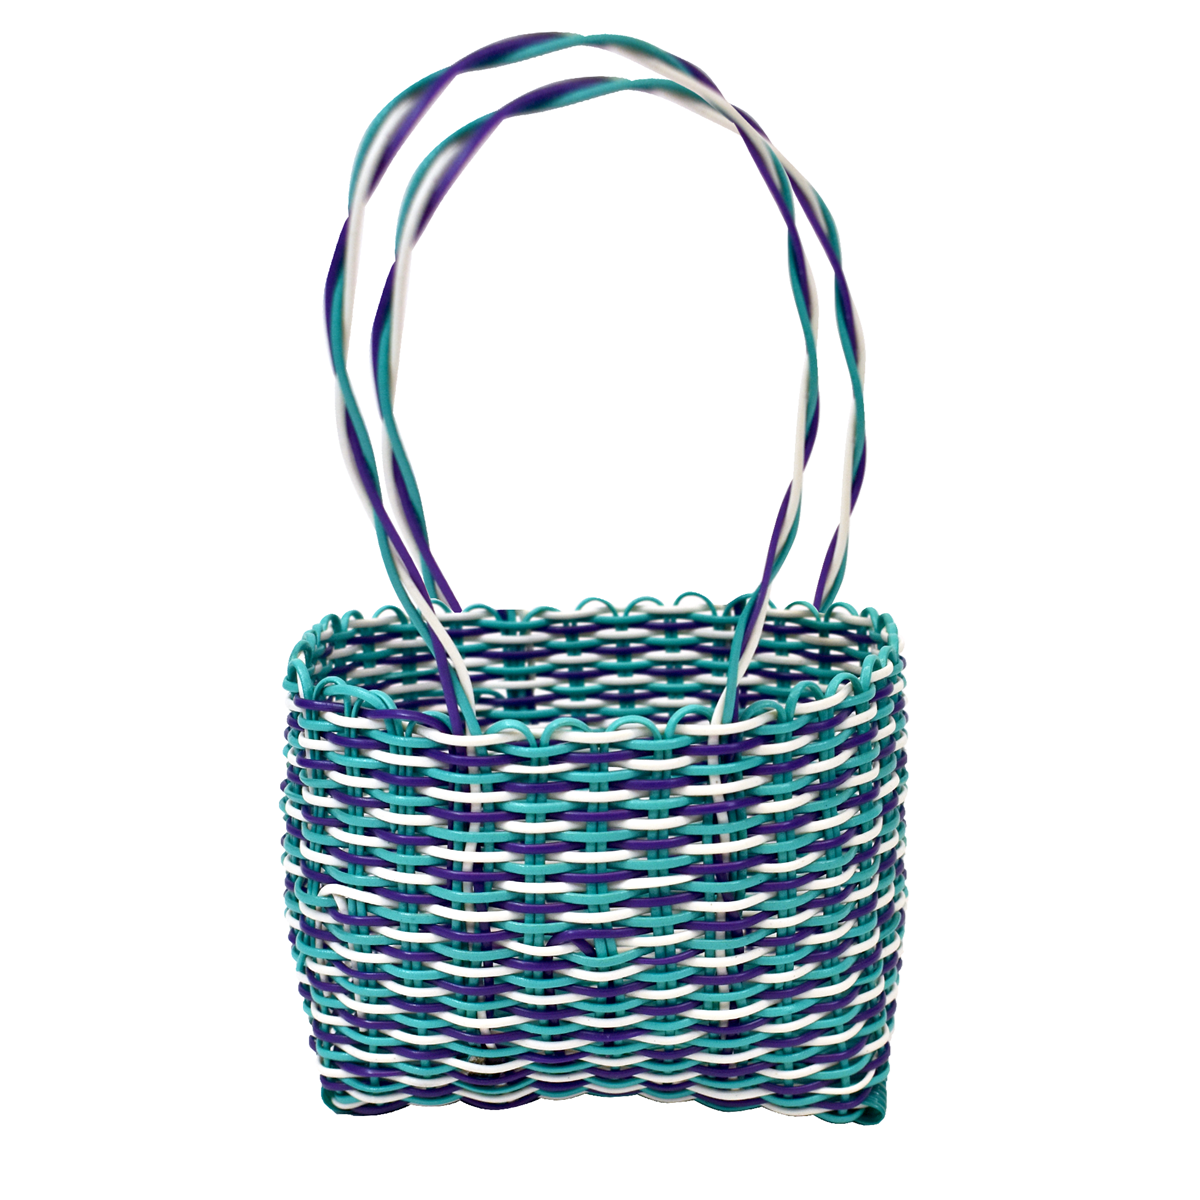 woven plastic gadget basket